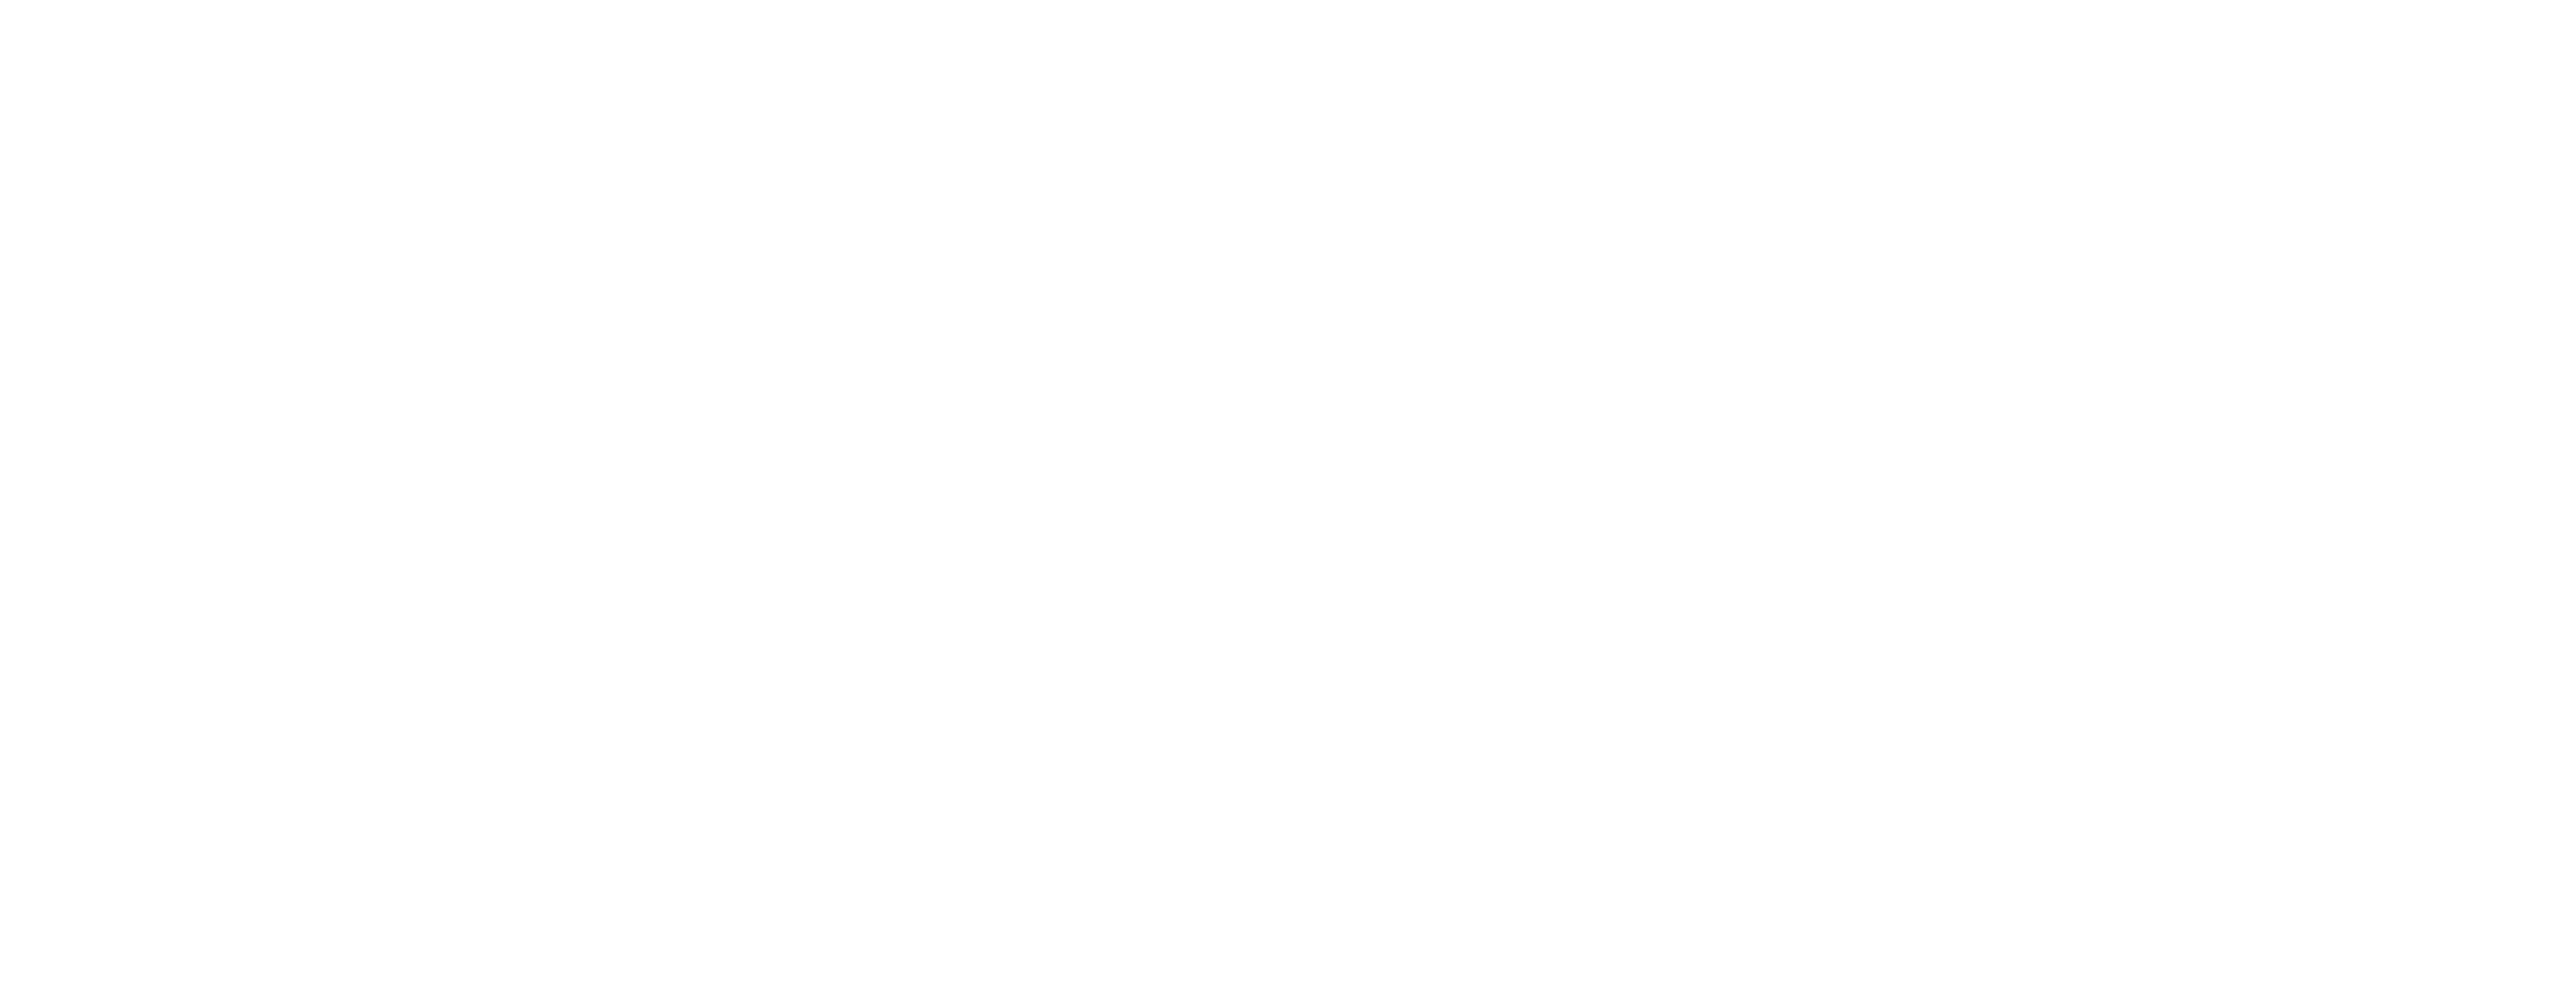 Trial & Error logo